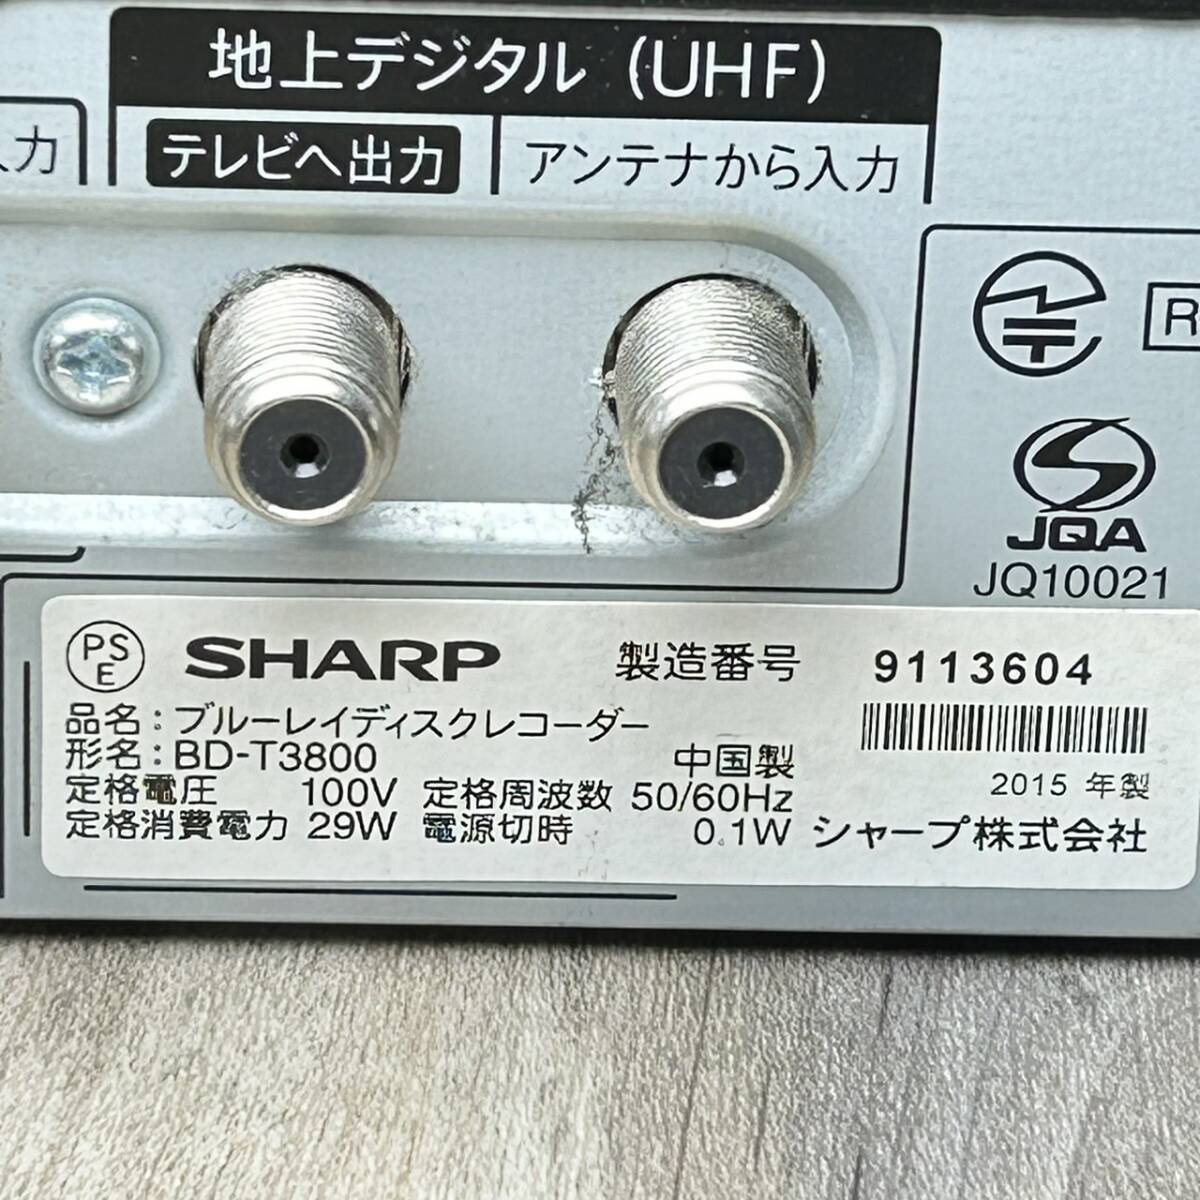 [Q31 три ]*[ текущее состояние лот ] AQUOS Blue-ray магнитофон (BD-T3800) sharp 